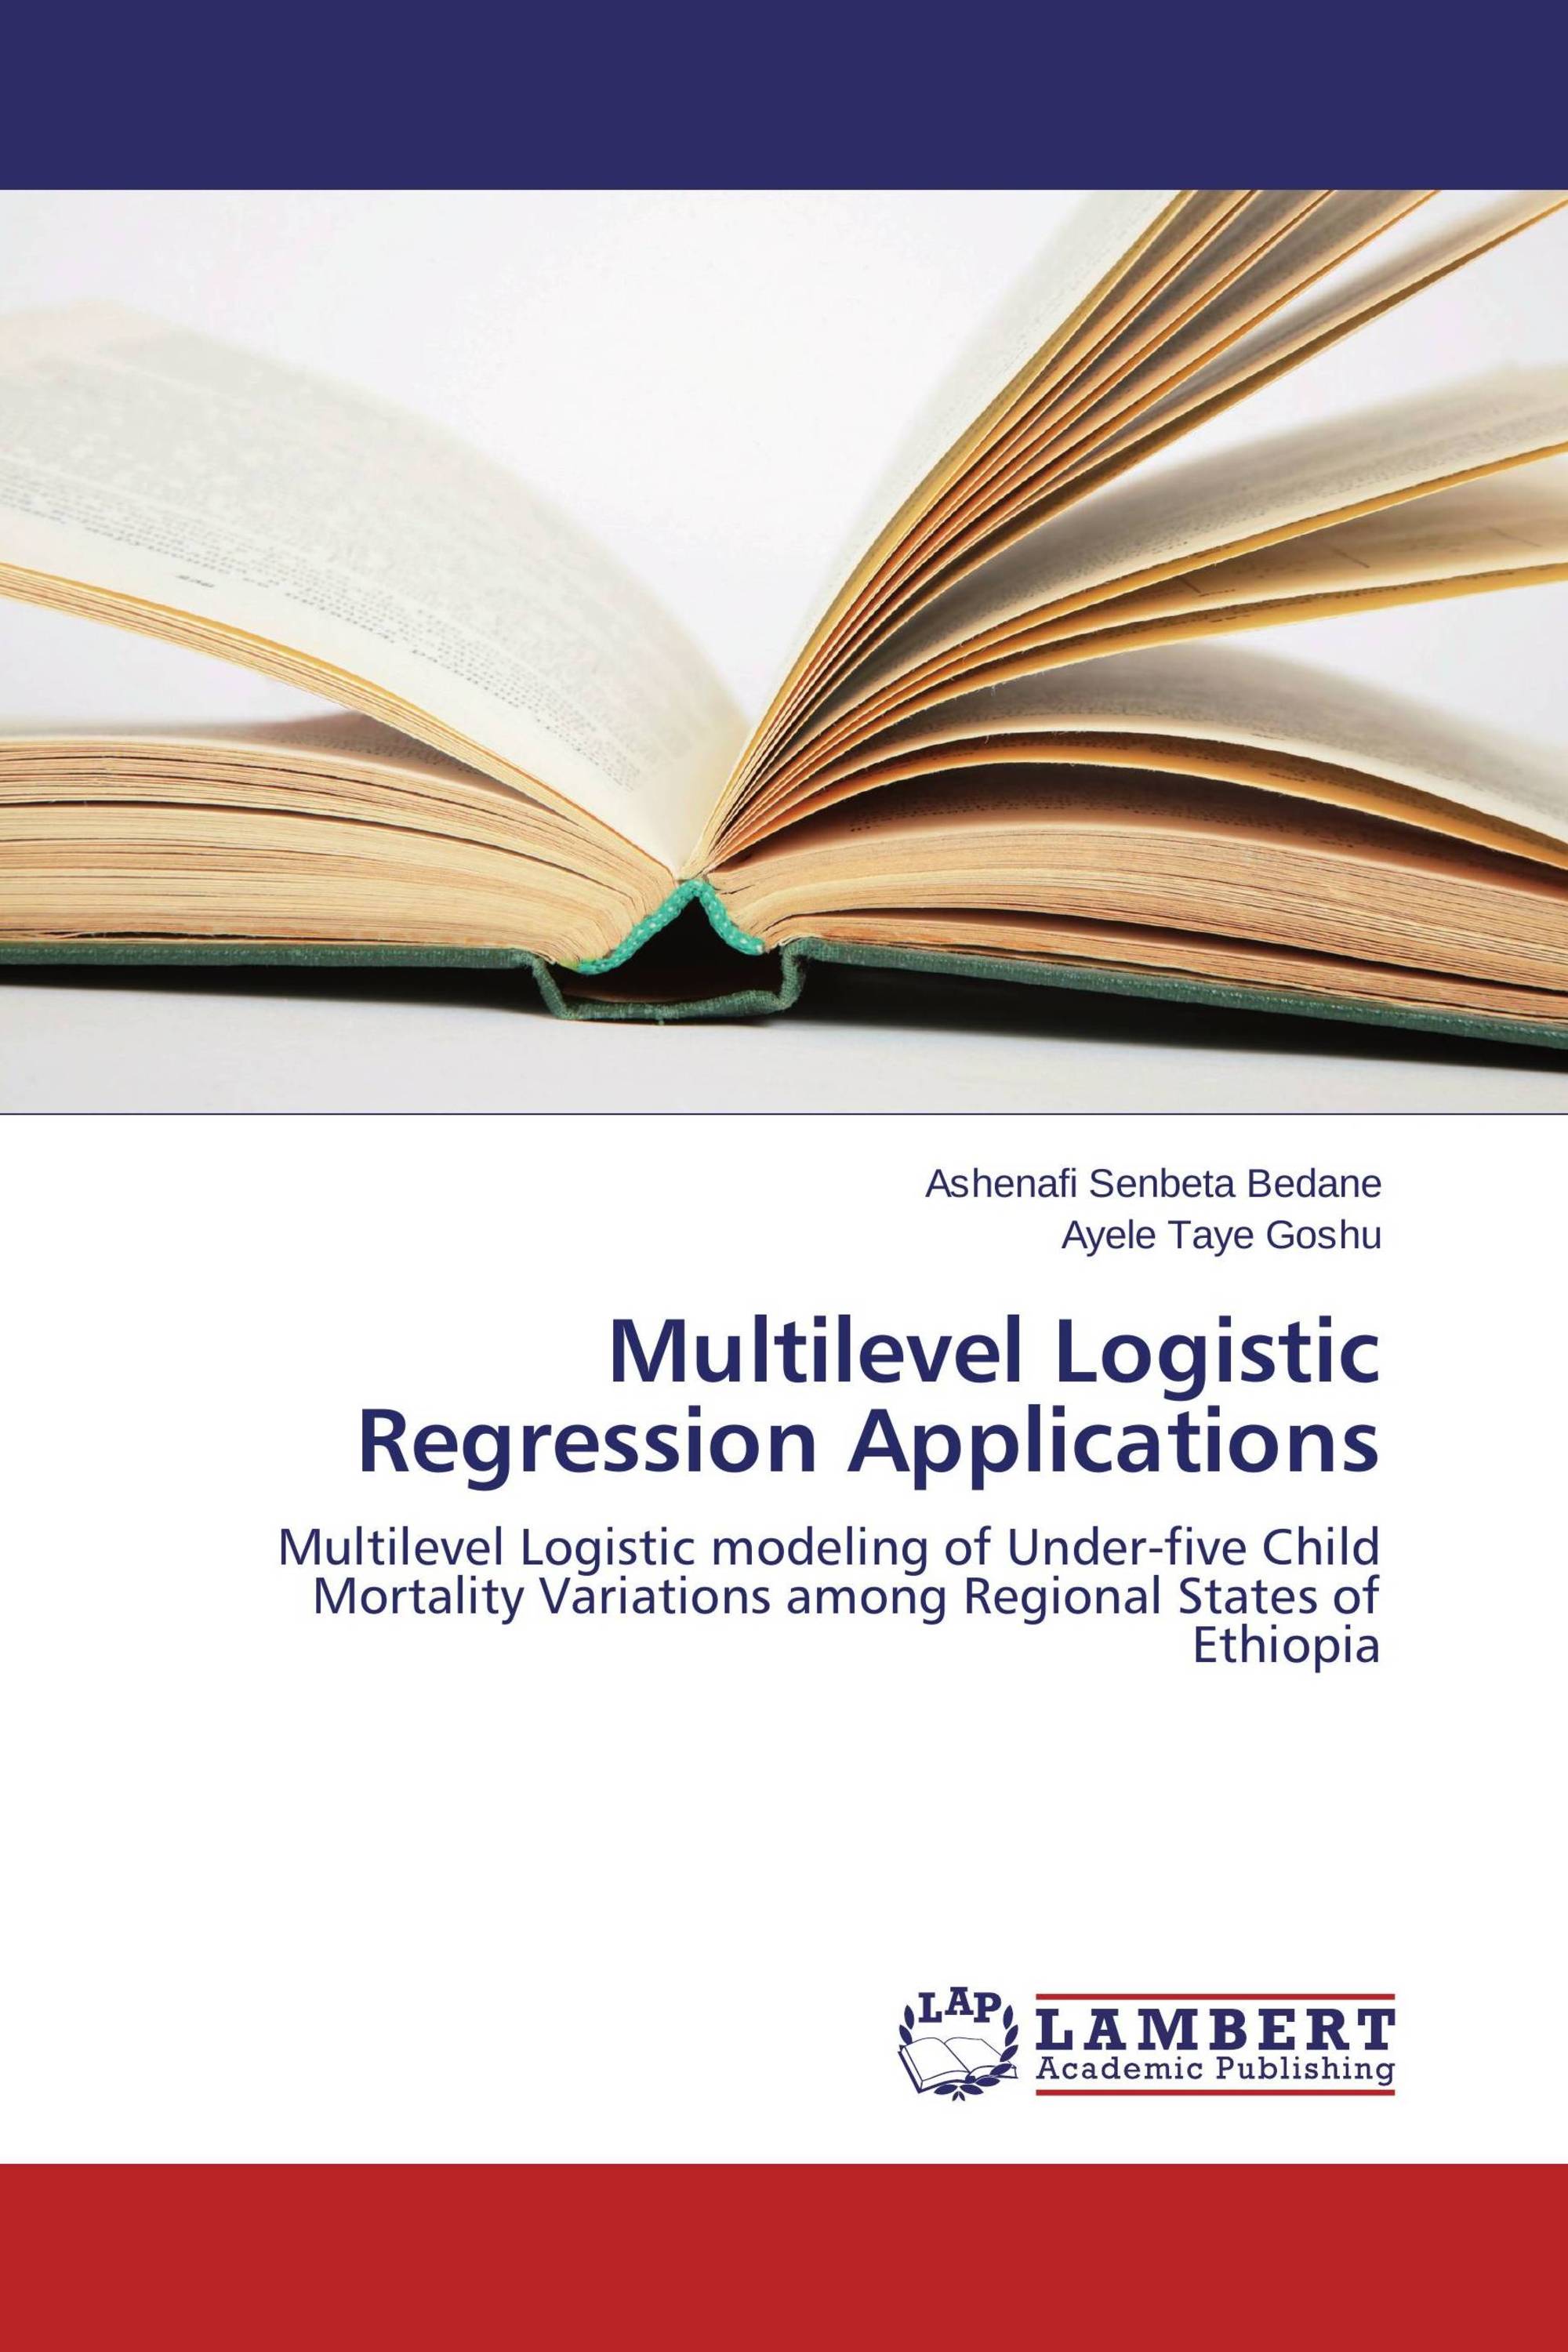 Dissertation logistic regression